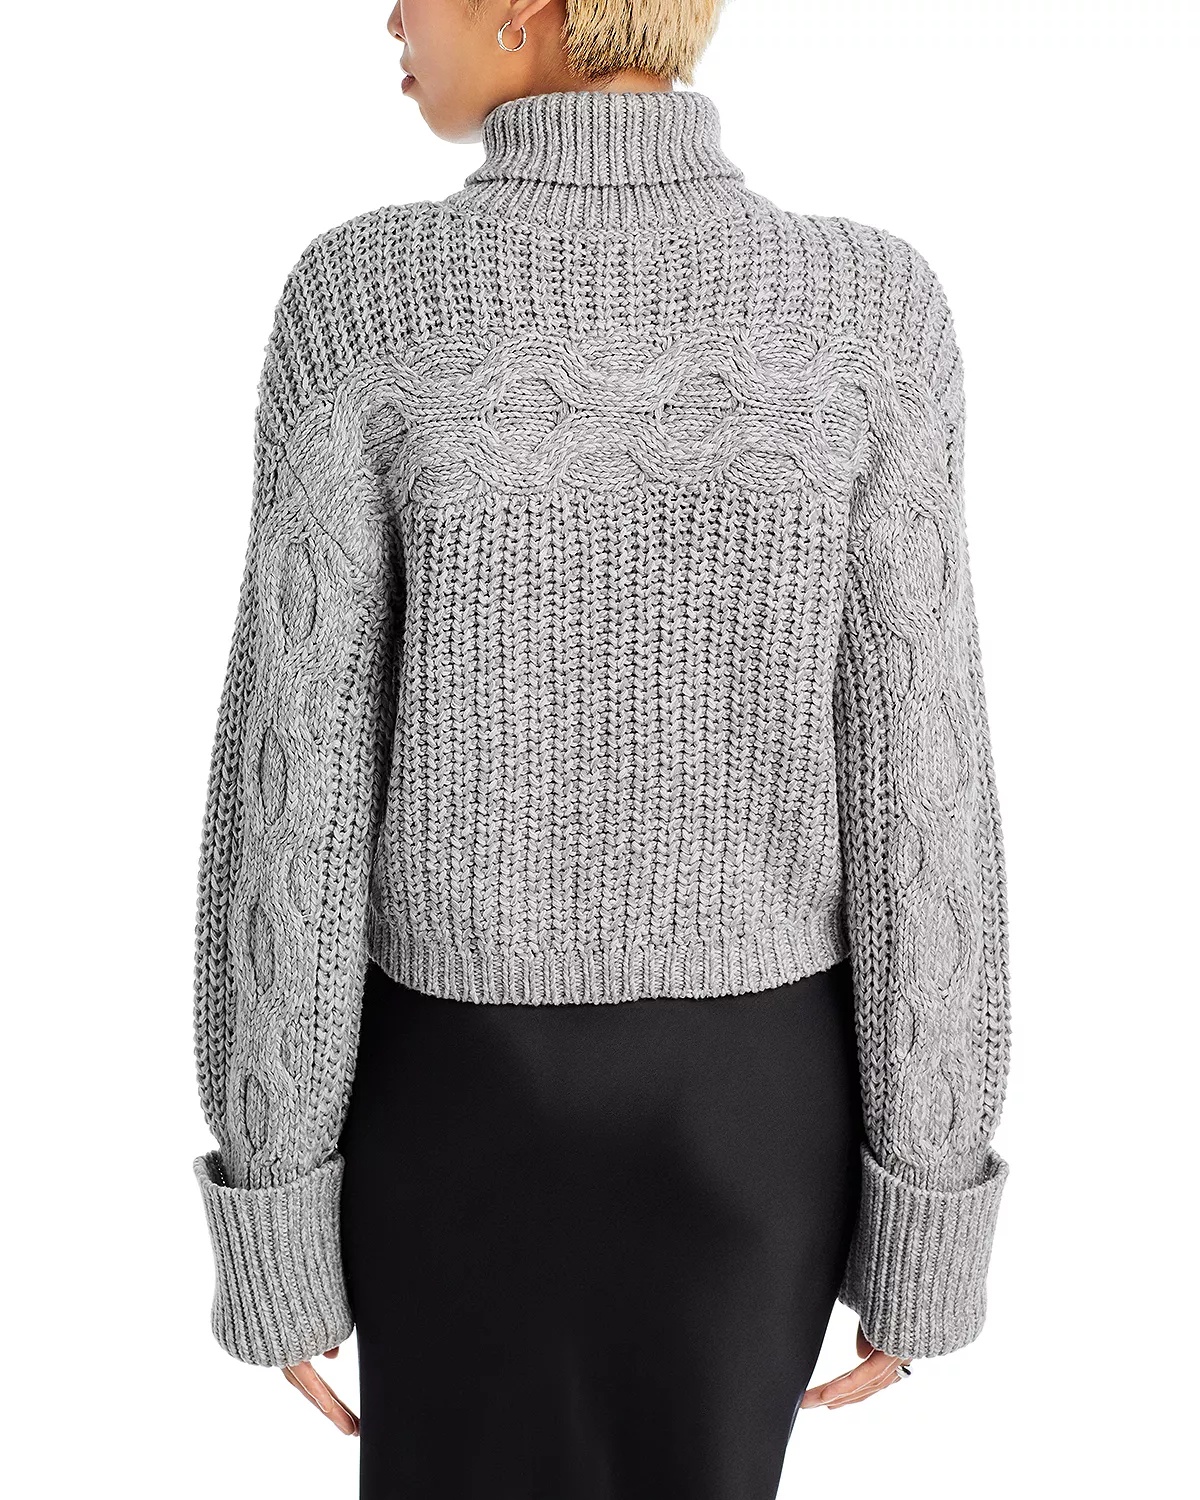 Vernacular Sweater - 2